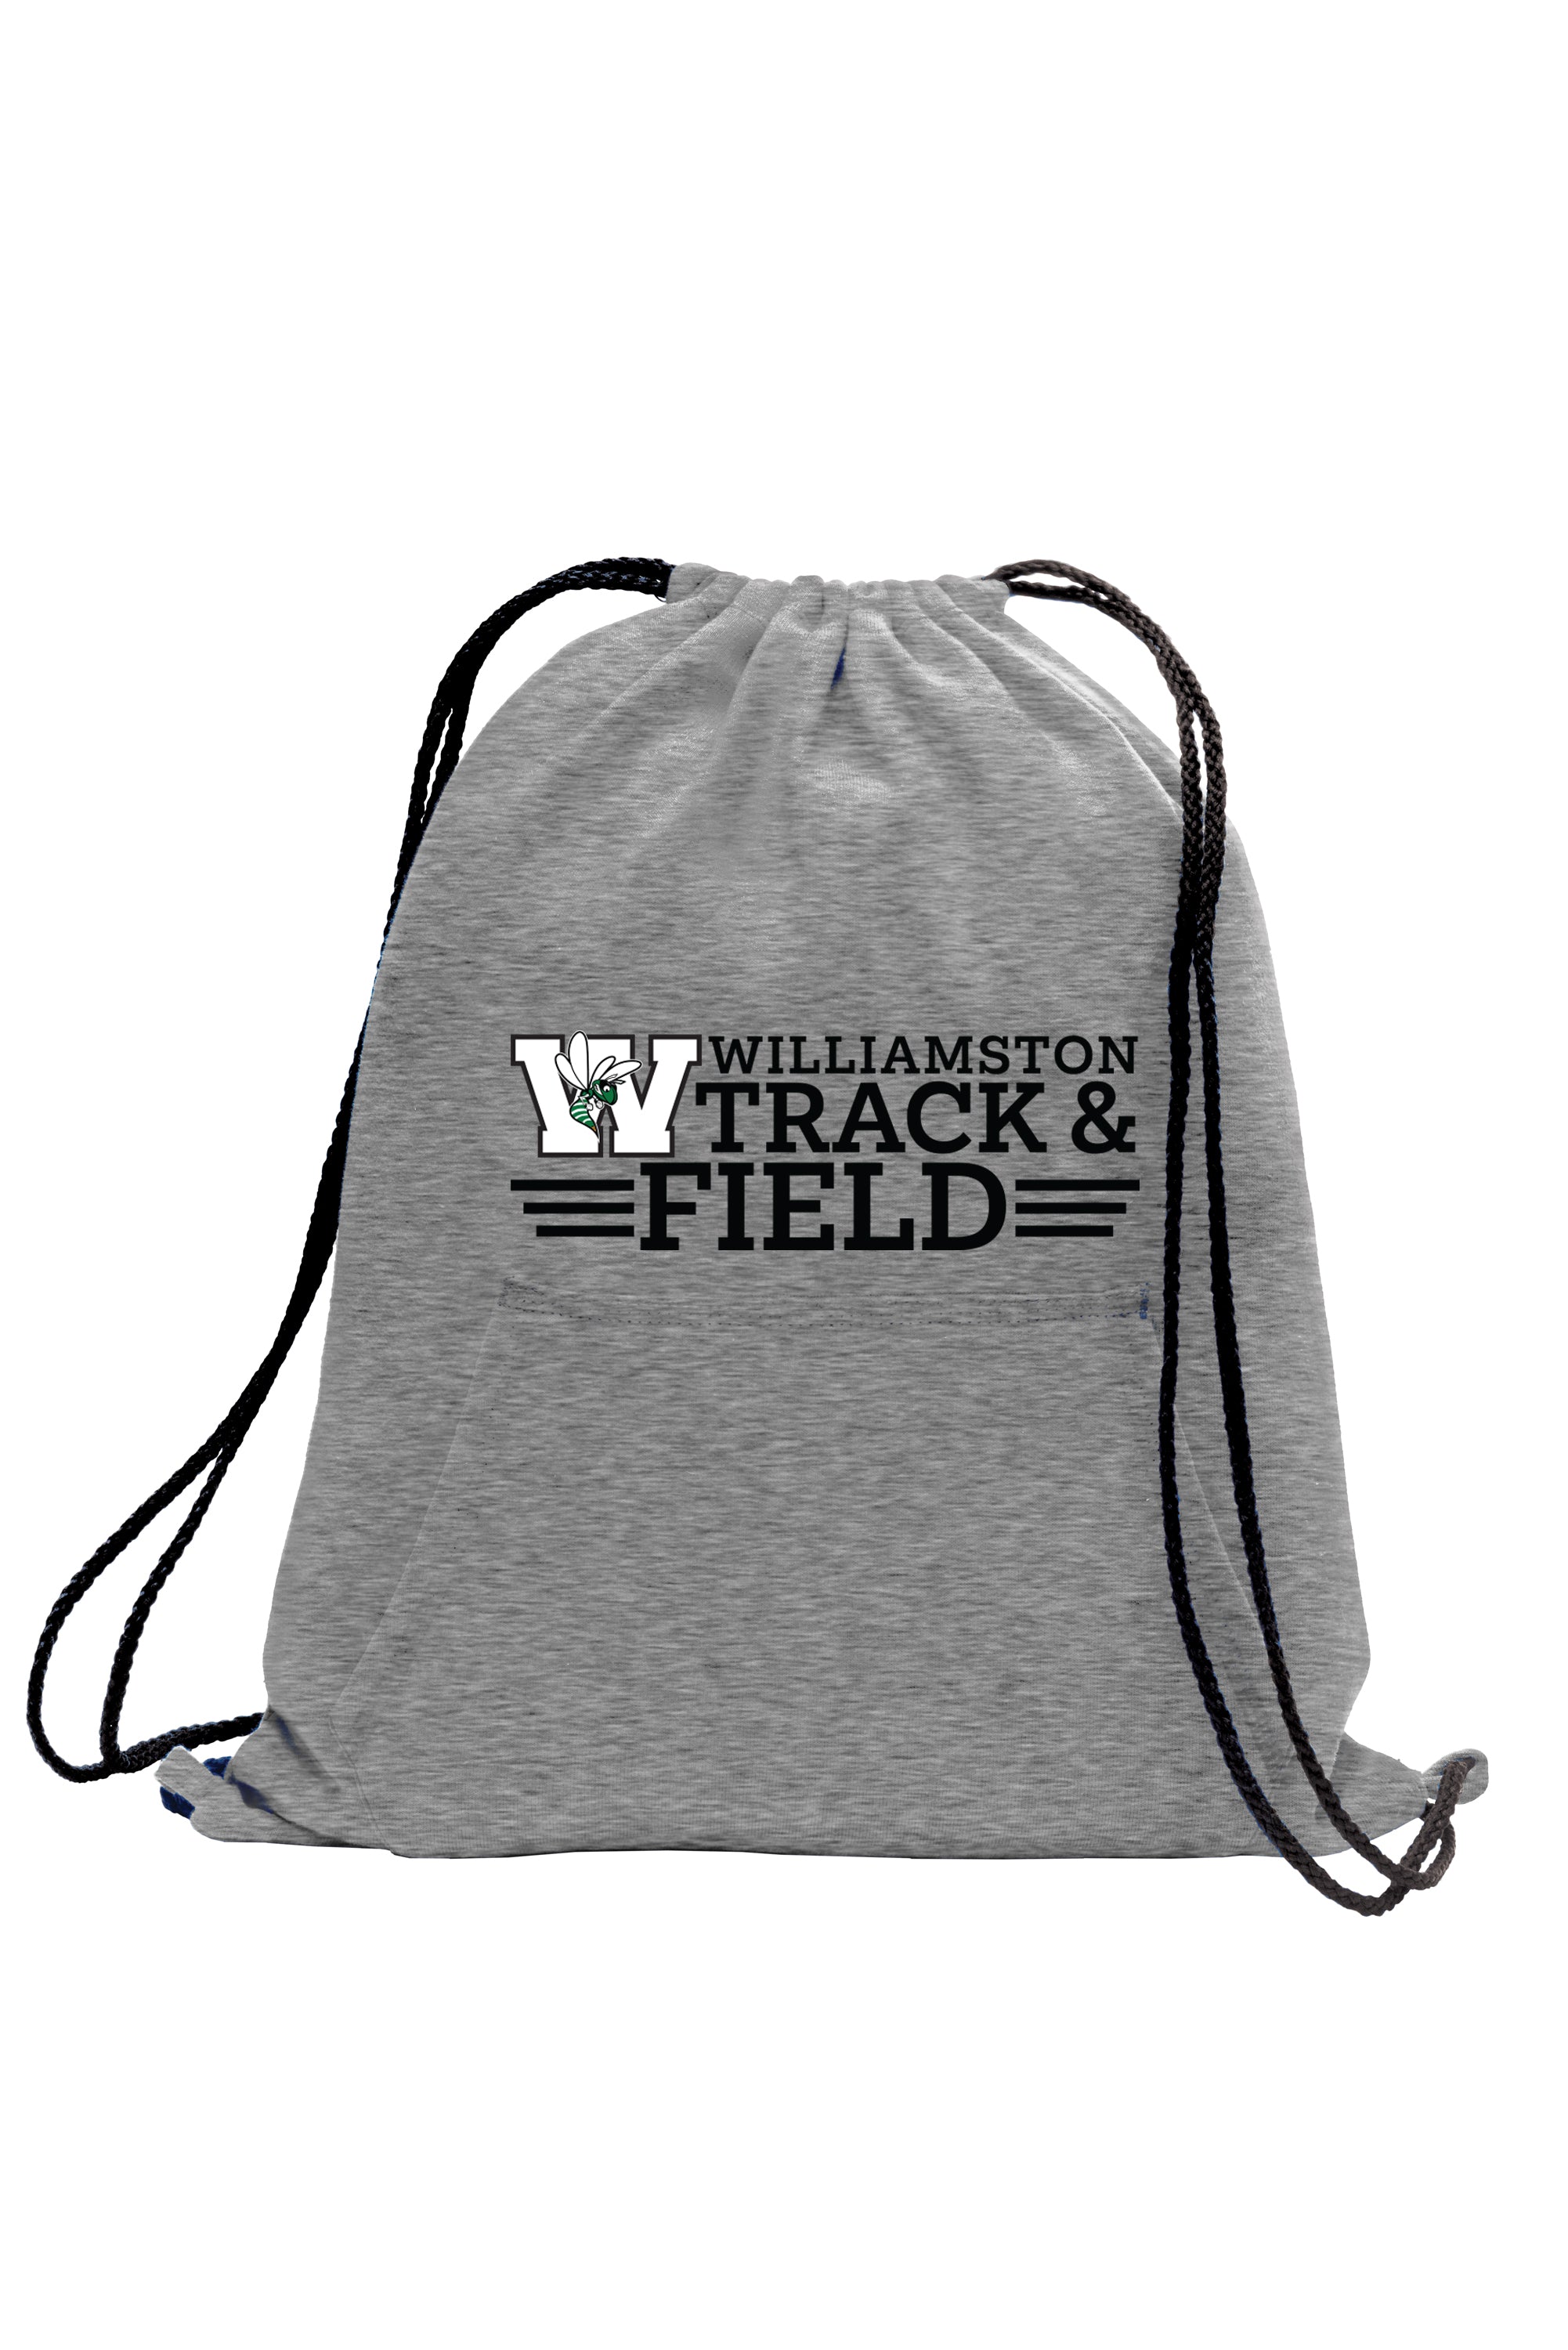 Williamston Track and Field - Drawstring Bag